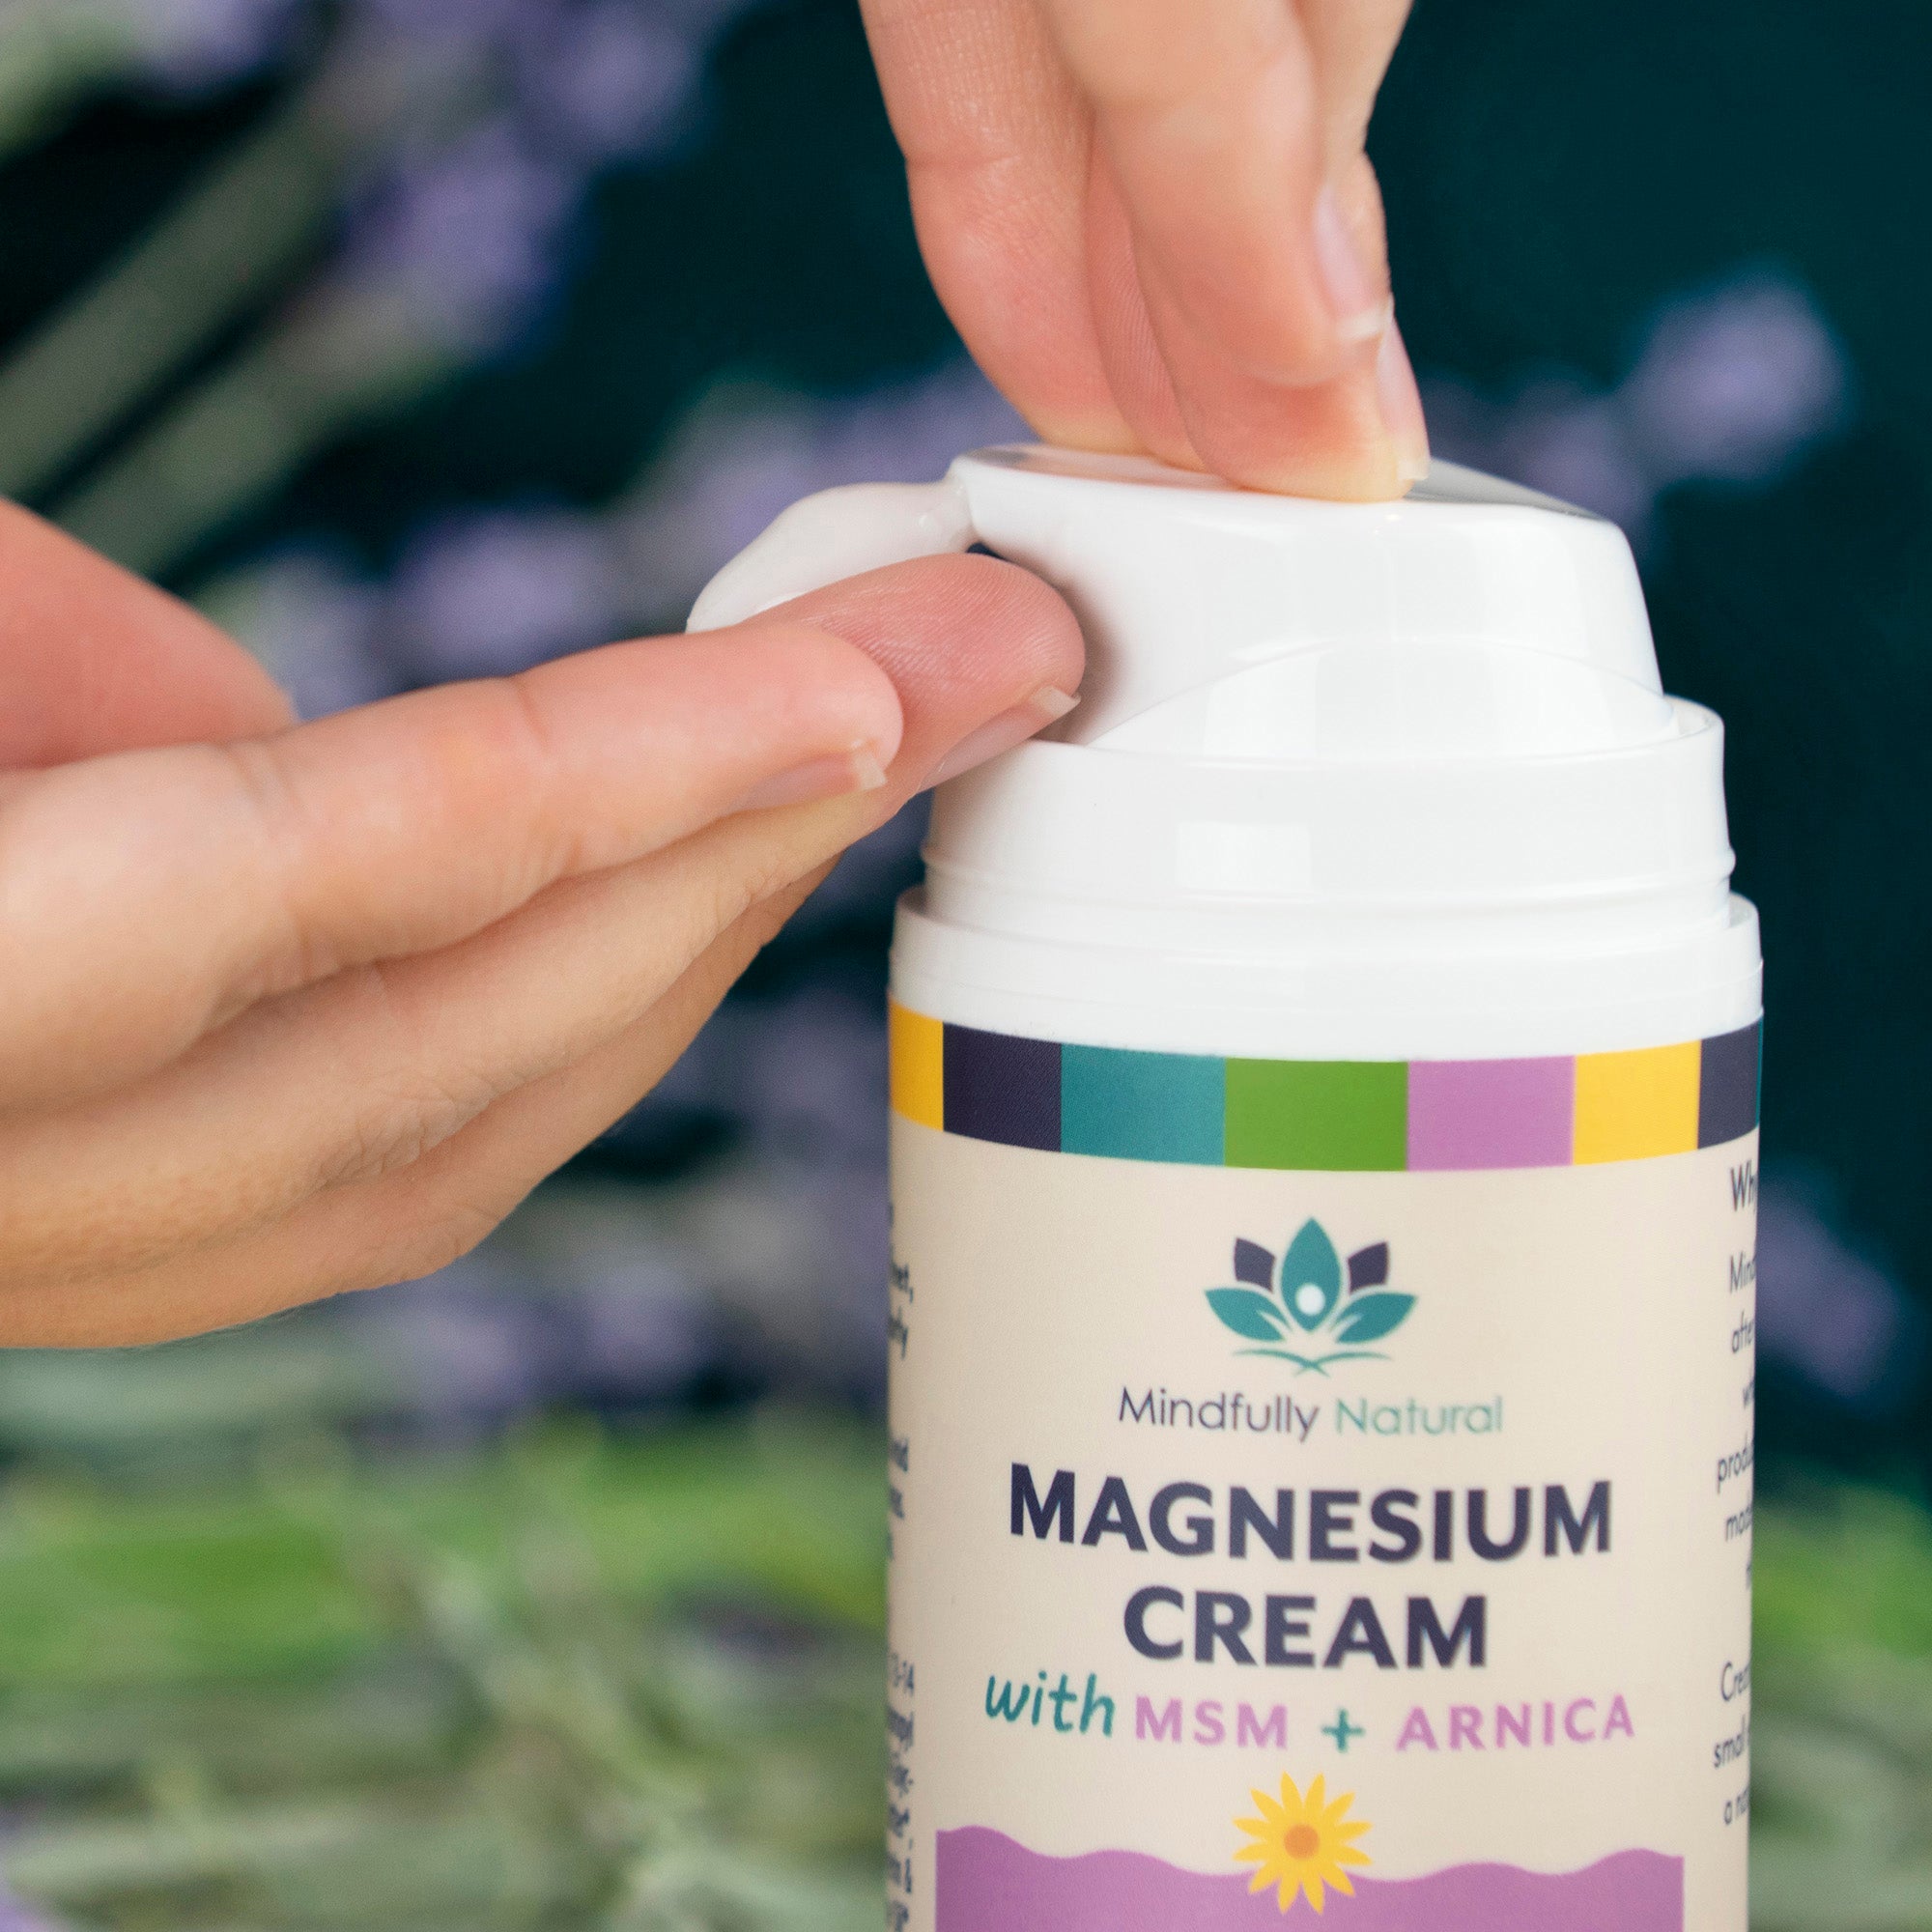 Mindfully Natural Magnesium Cream airless pump